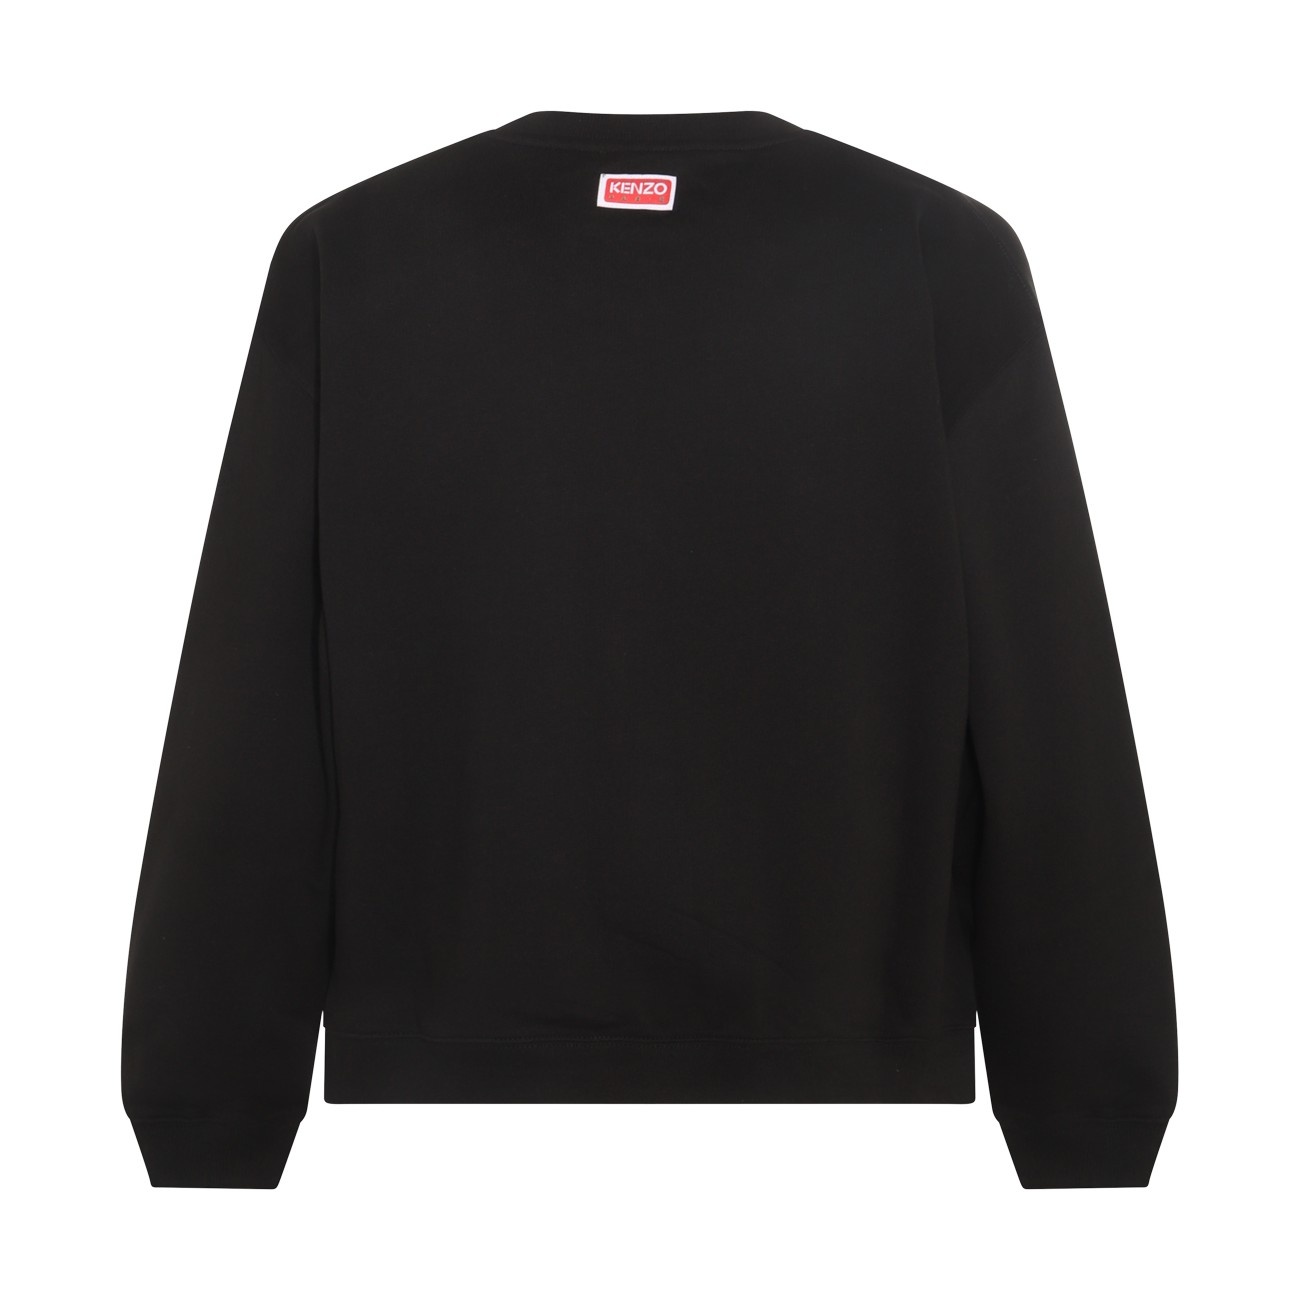 black, grey and white cotton sweatshirt - 2